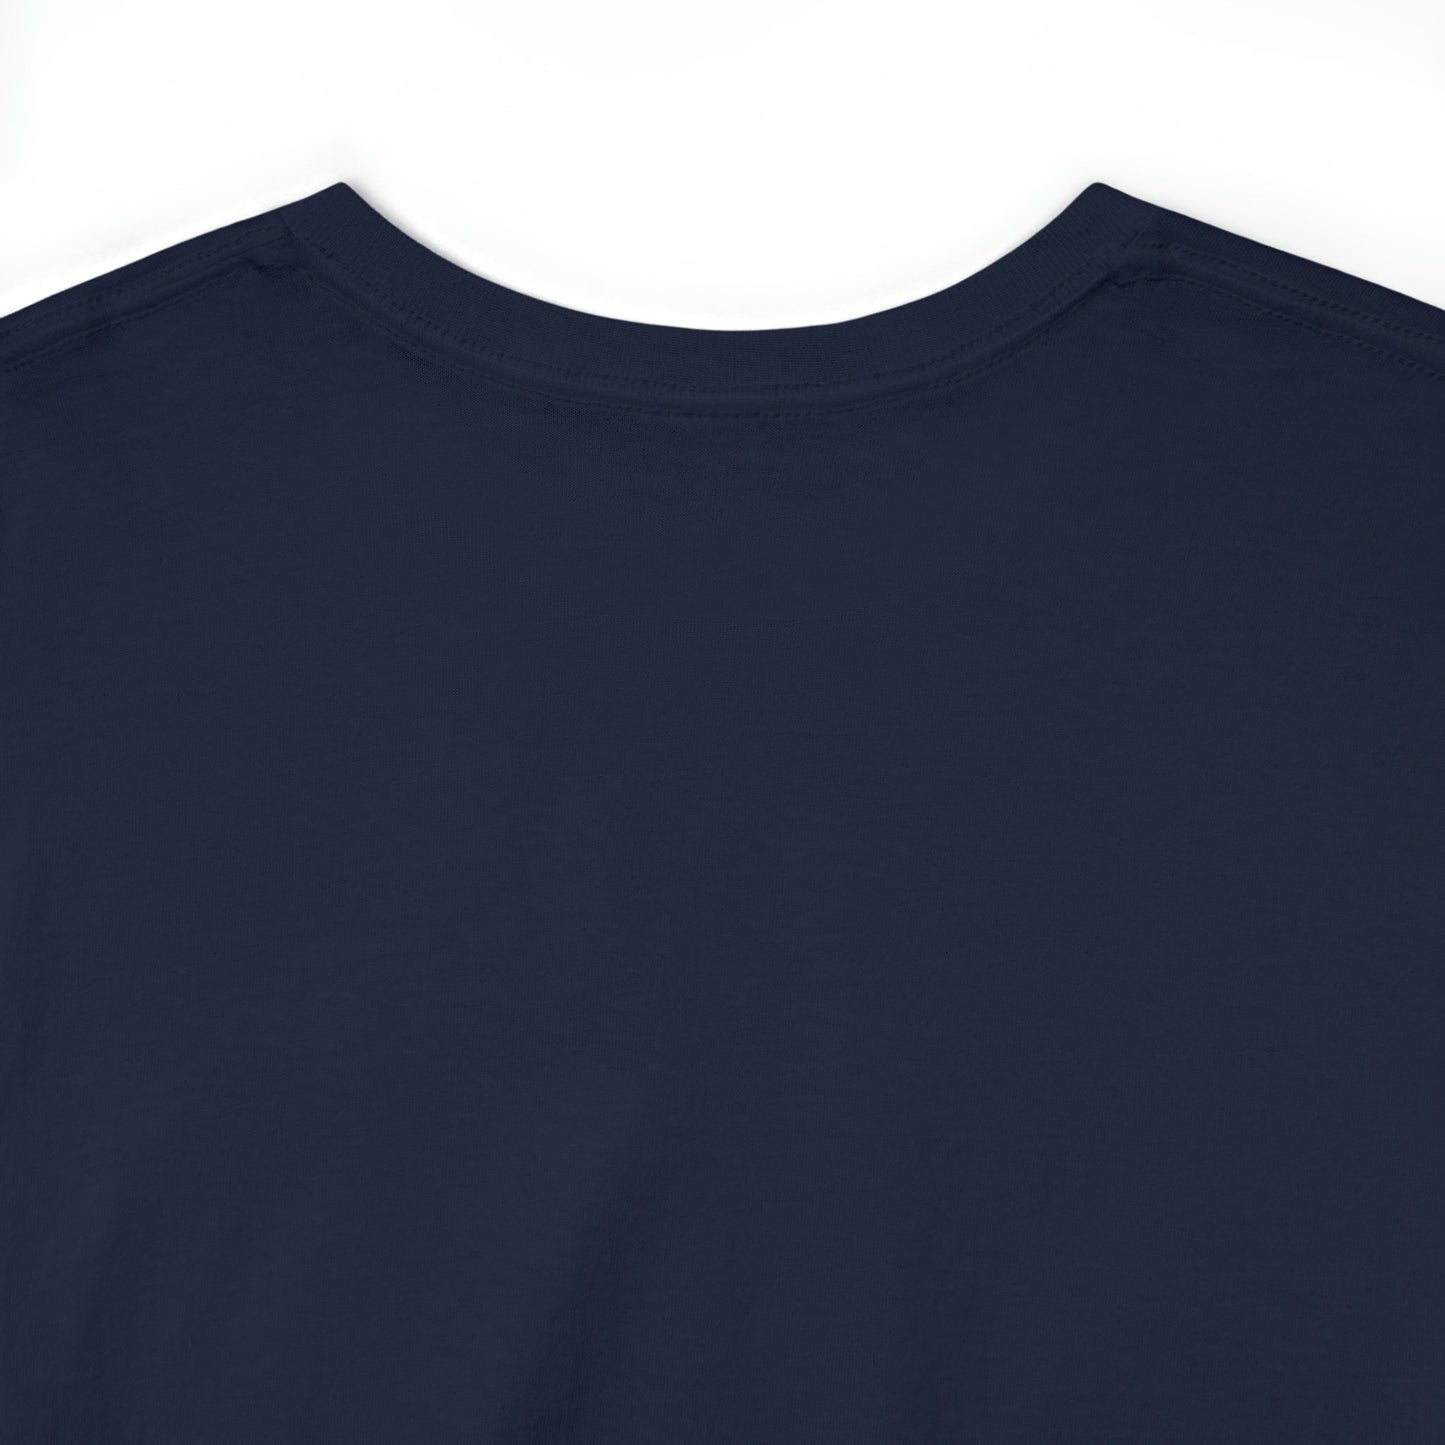 T-Shirt Basic - Homme - Collection "Aponévrose" (510) - Le Traileur Anonyme